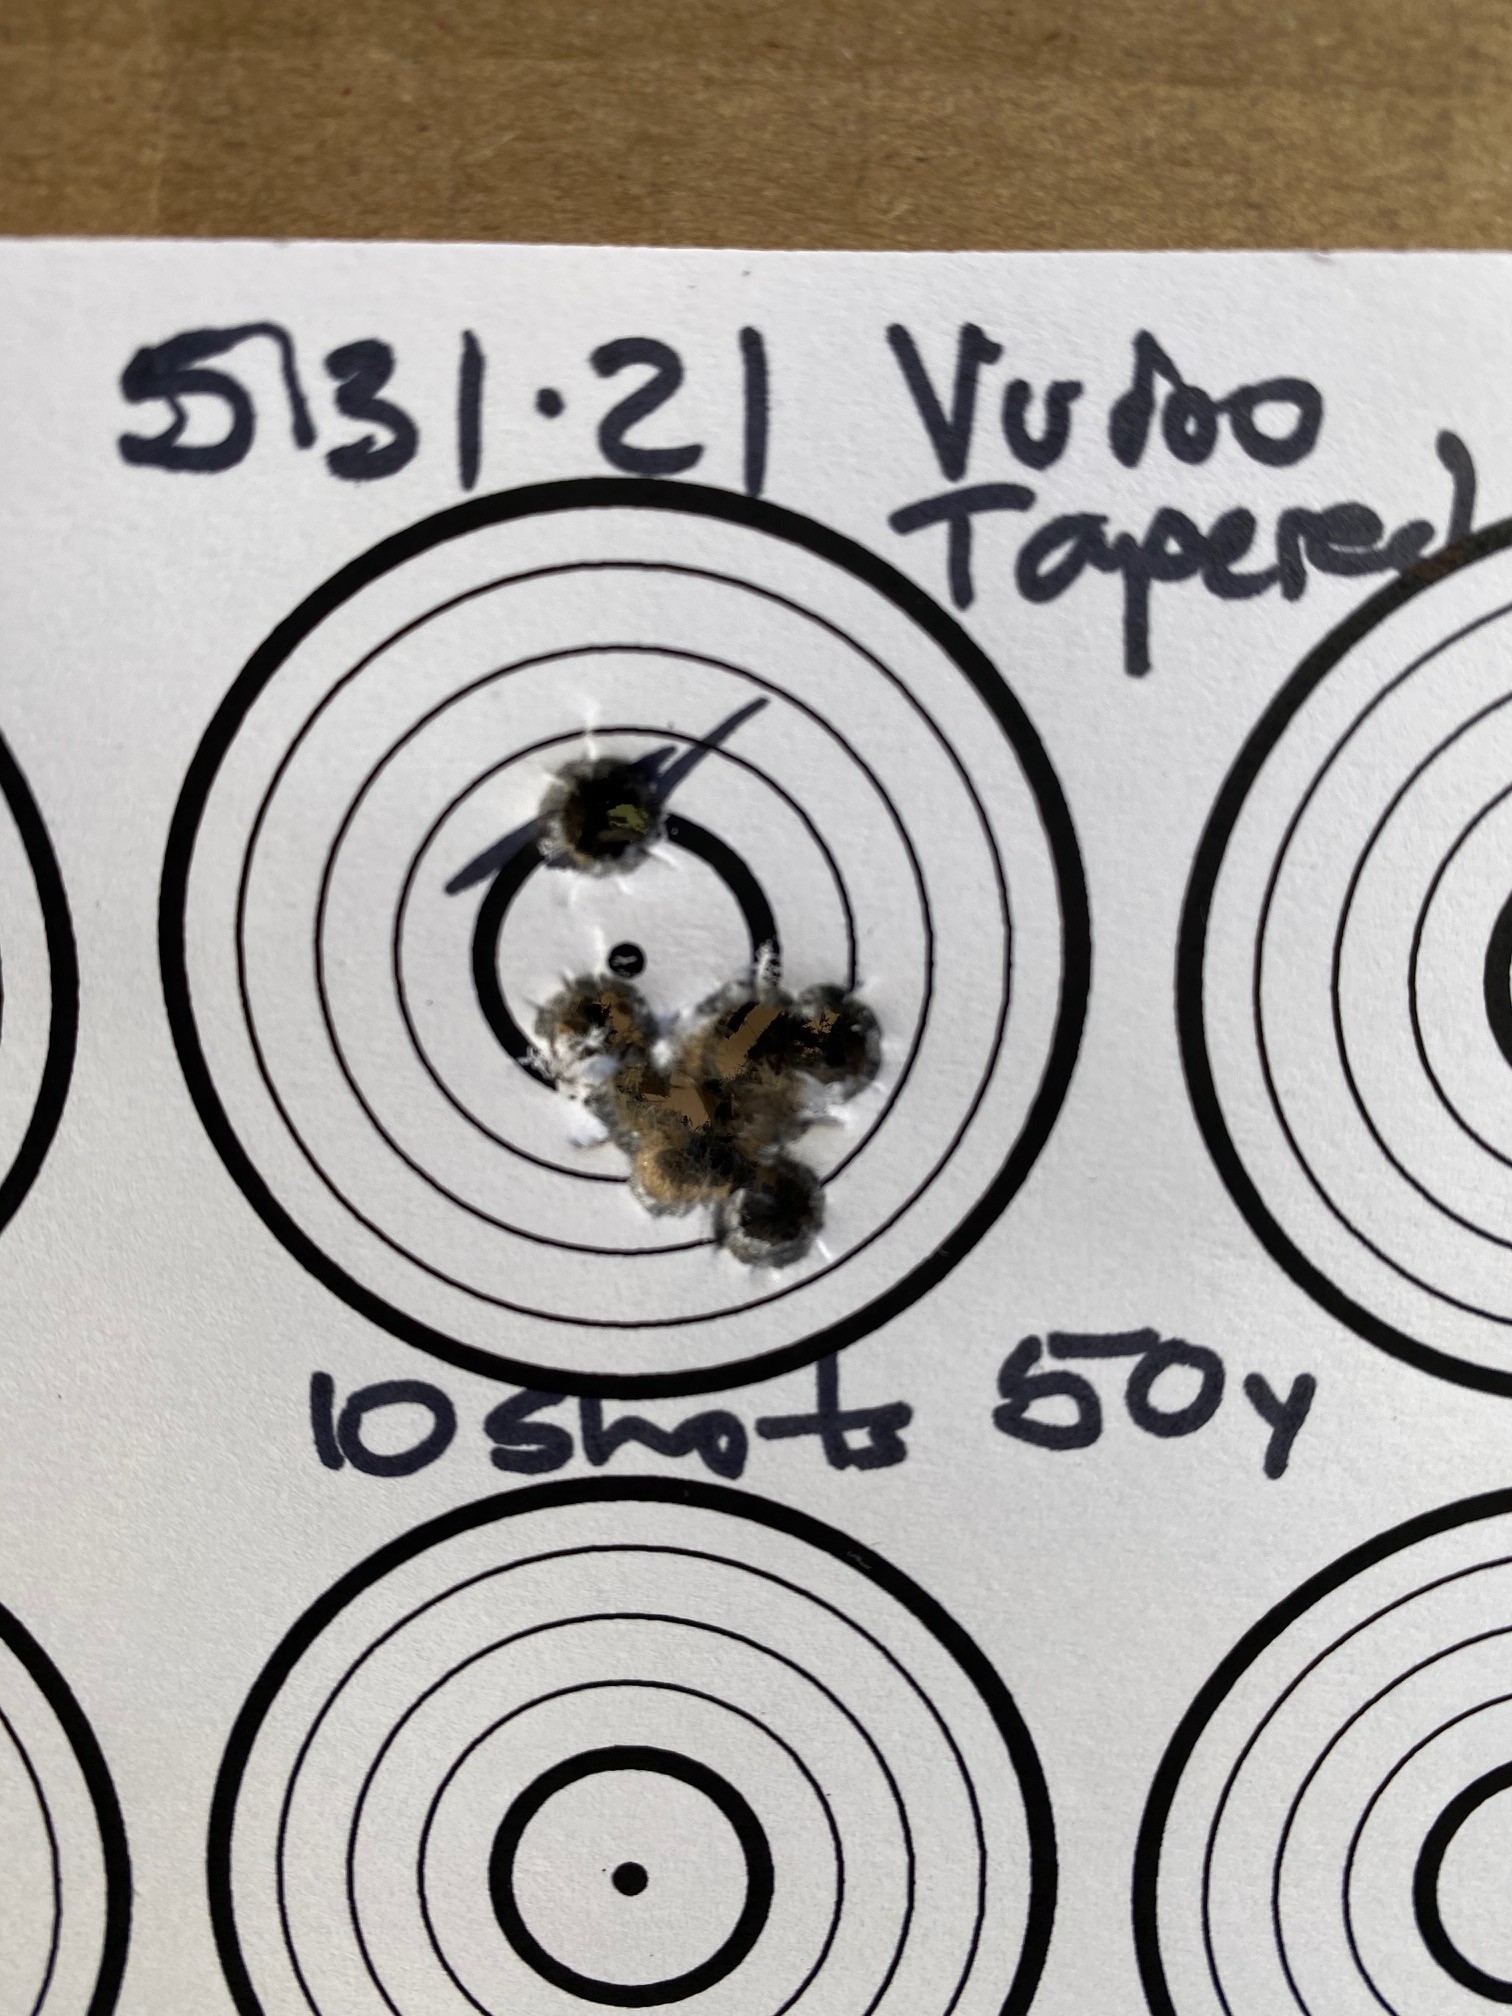 2021 5 31 50 yards 10 shots Tapered Barrel Eley Black Box 5.06-08gr.jpg